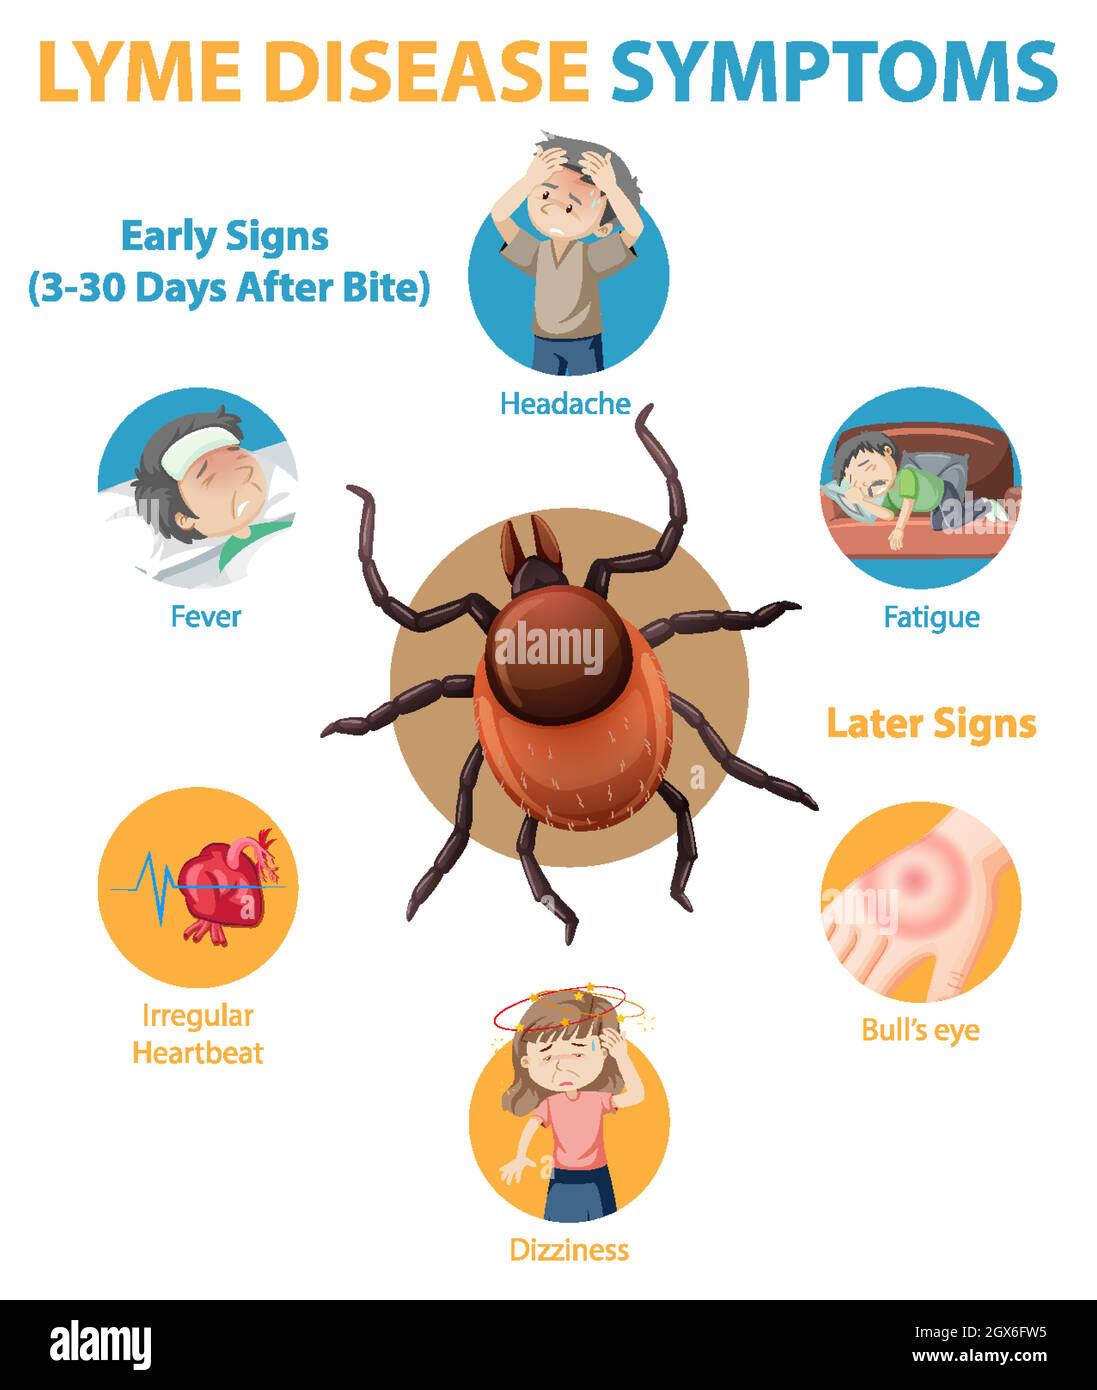 Lyme disease symptoms information infographic Stock Vector